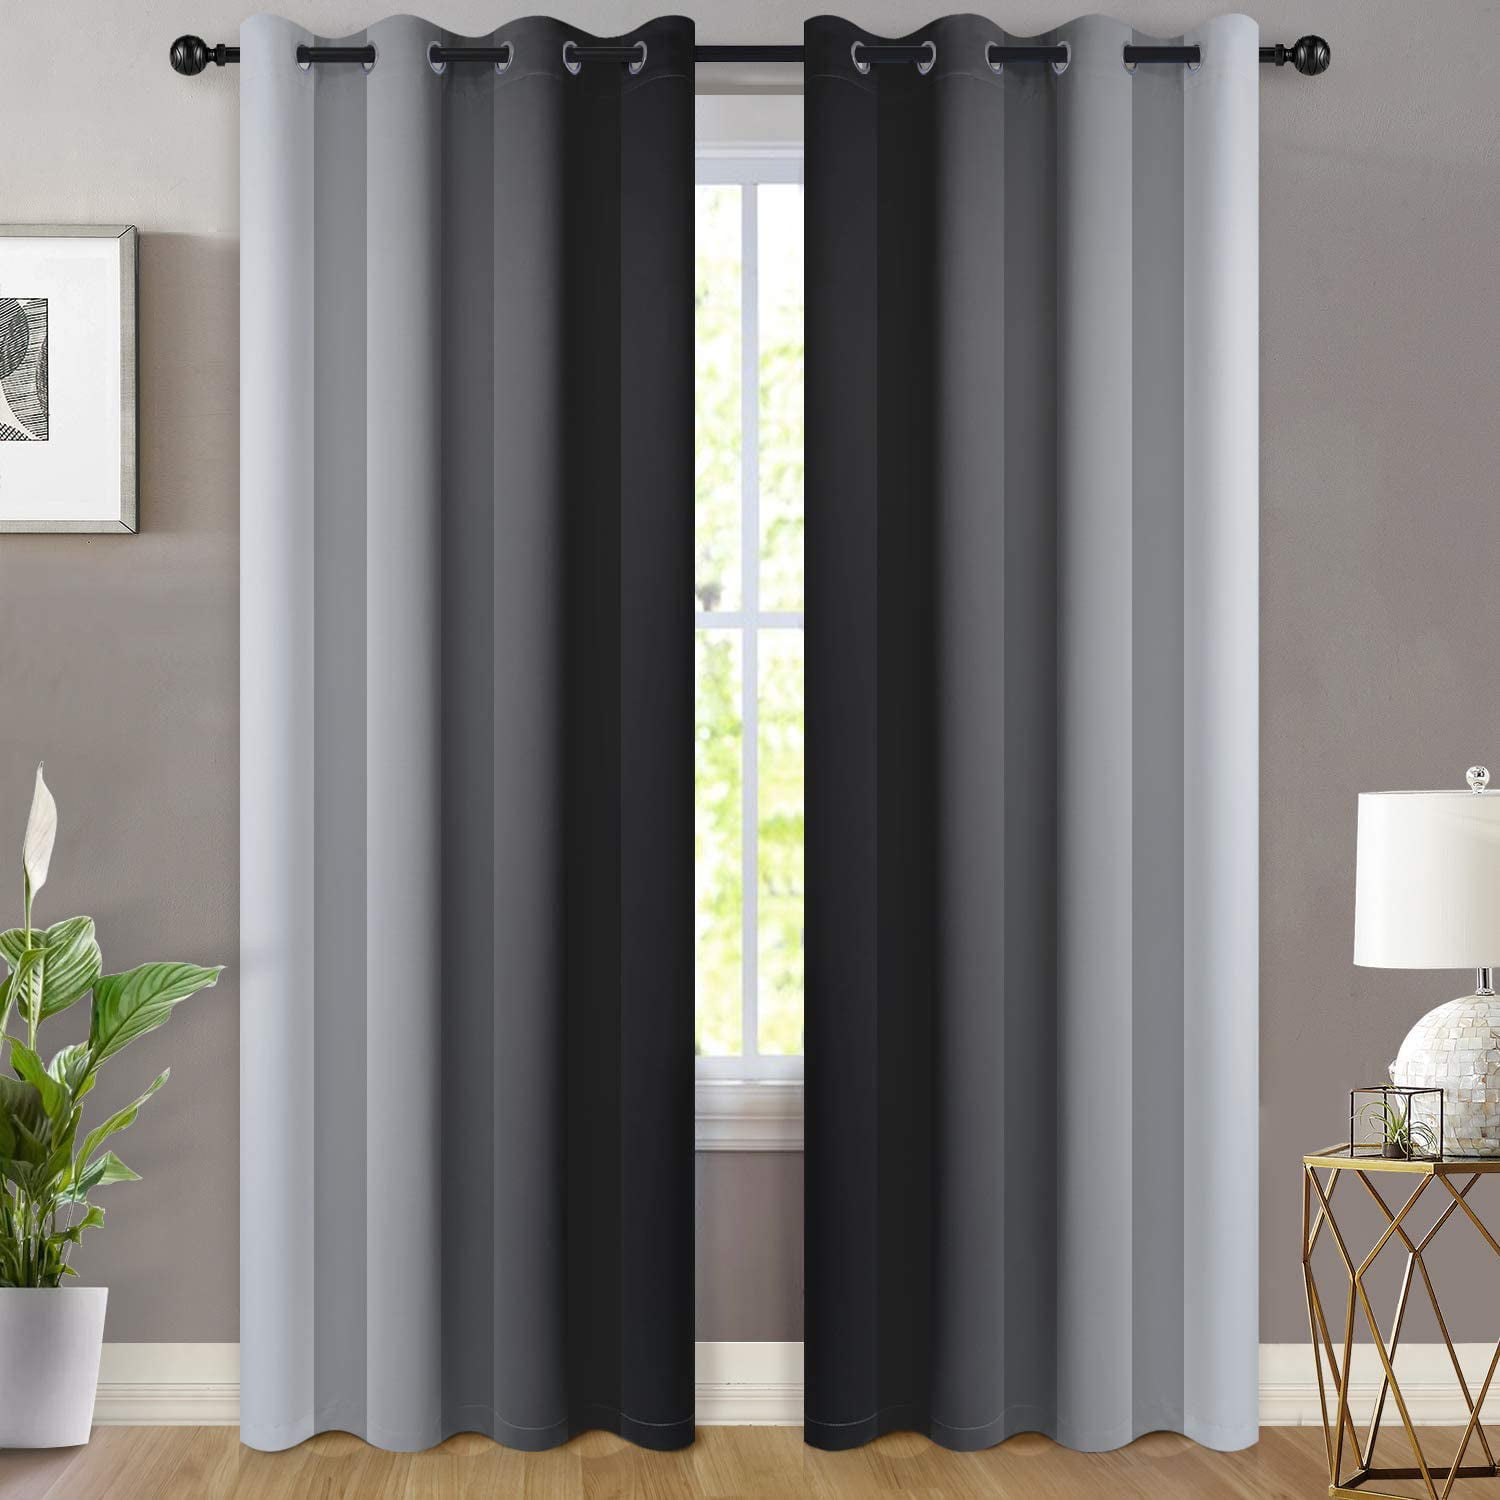  Muamar Velcro Blackout Curtains for Bedroom 2 Panels